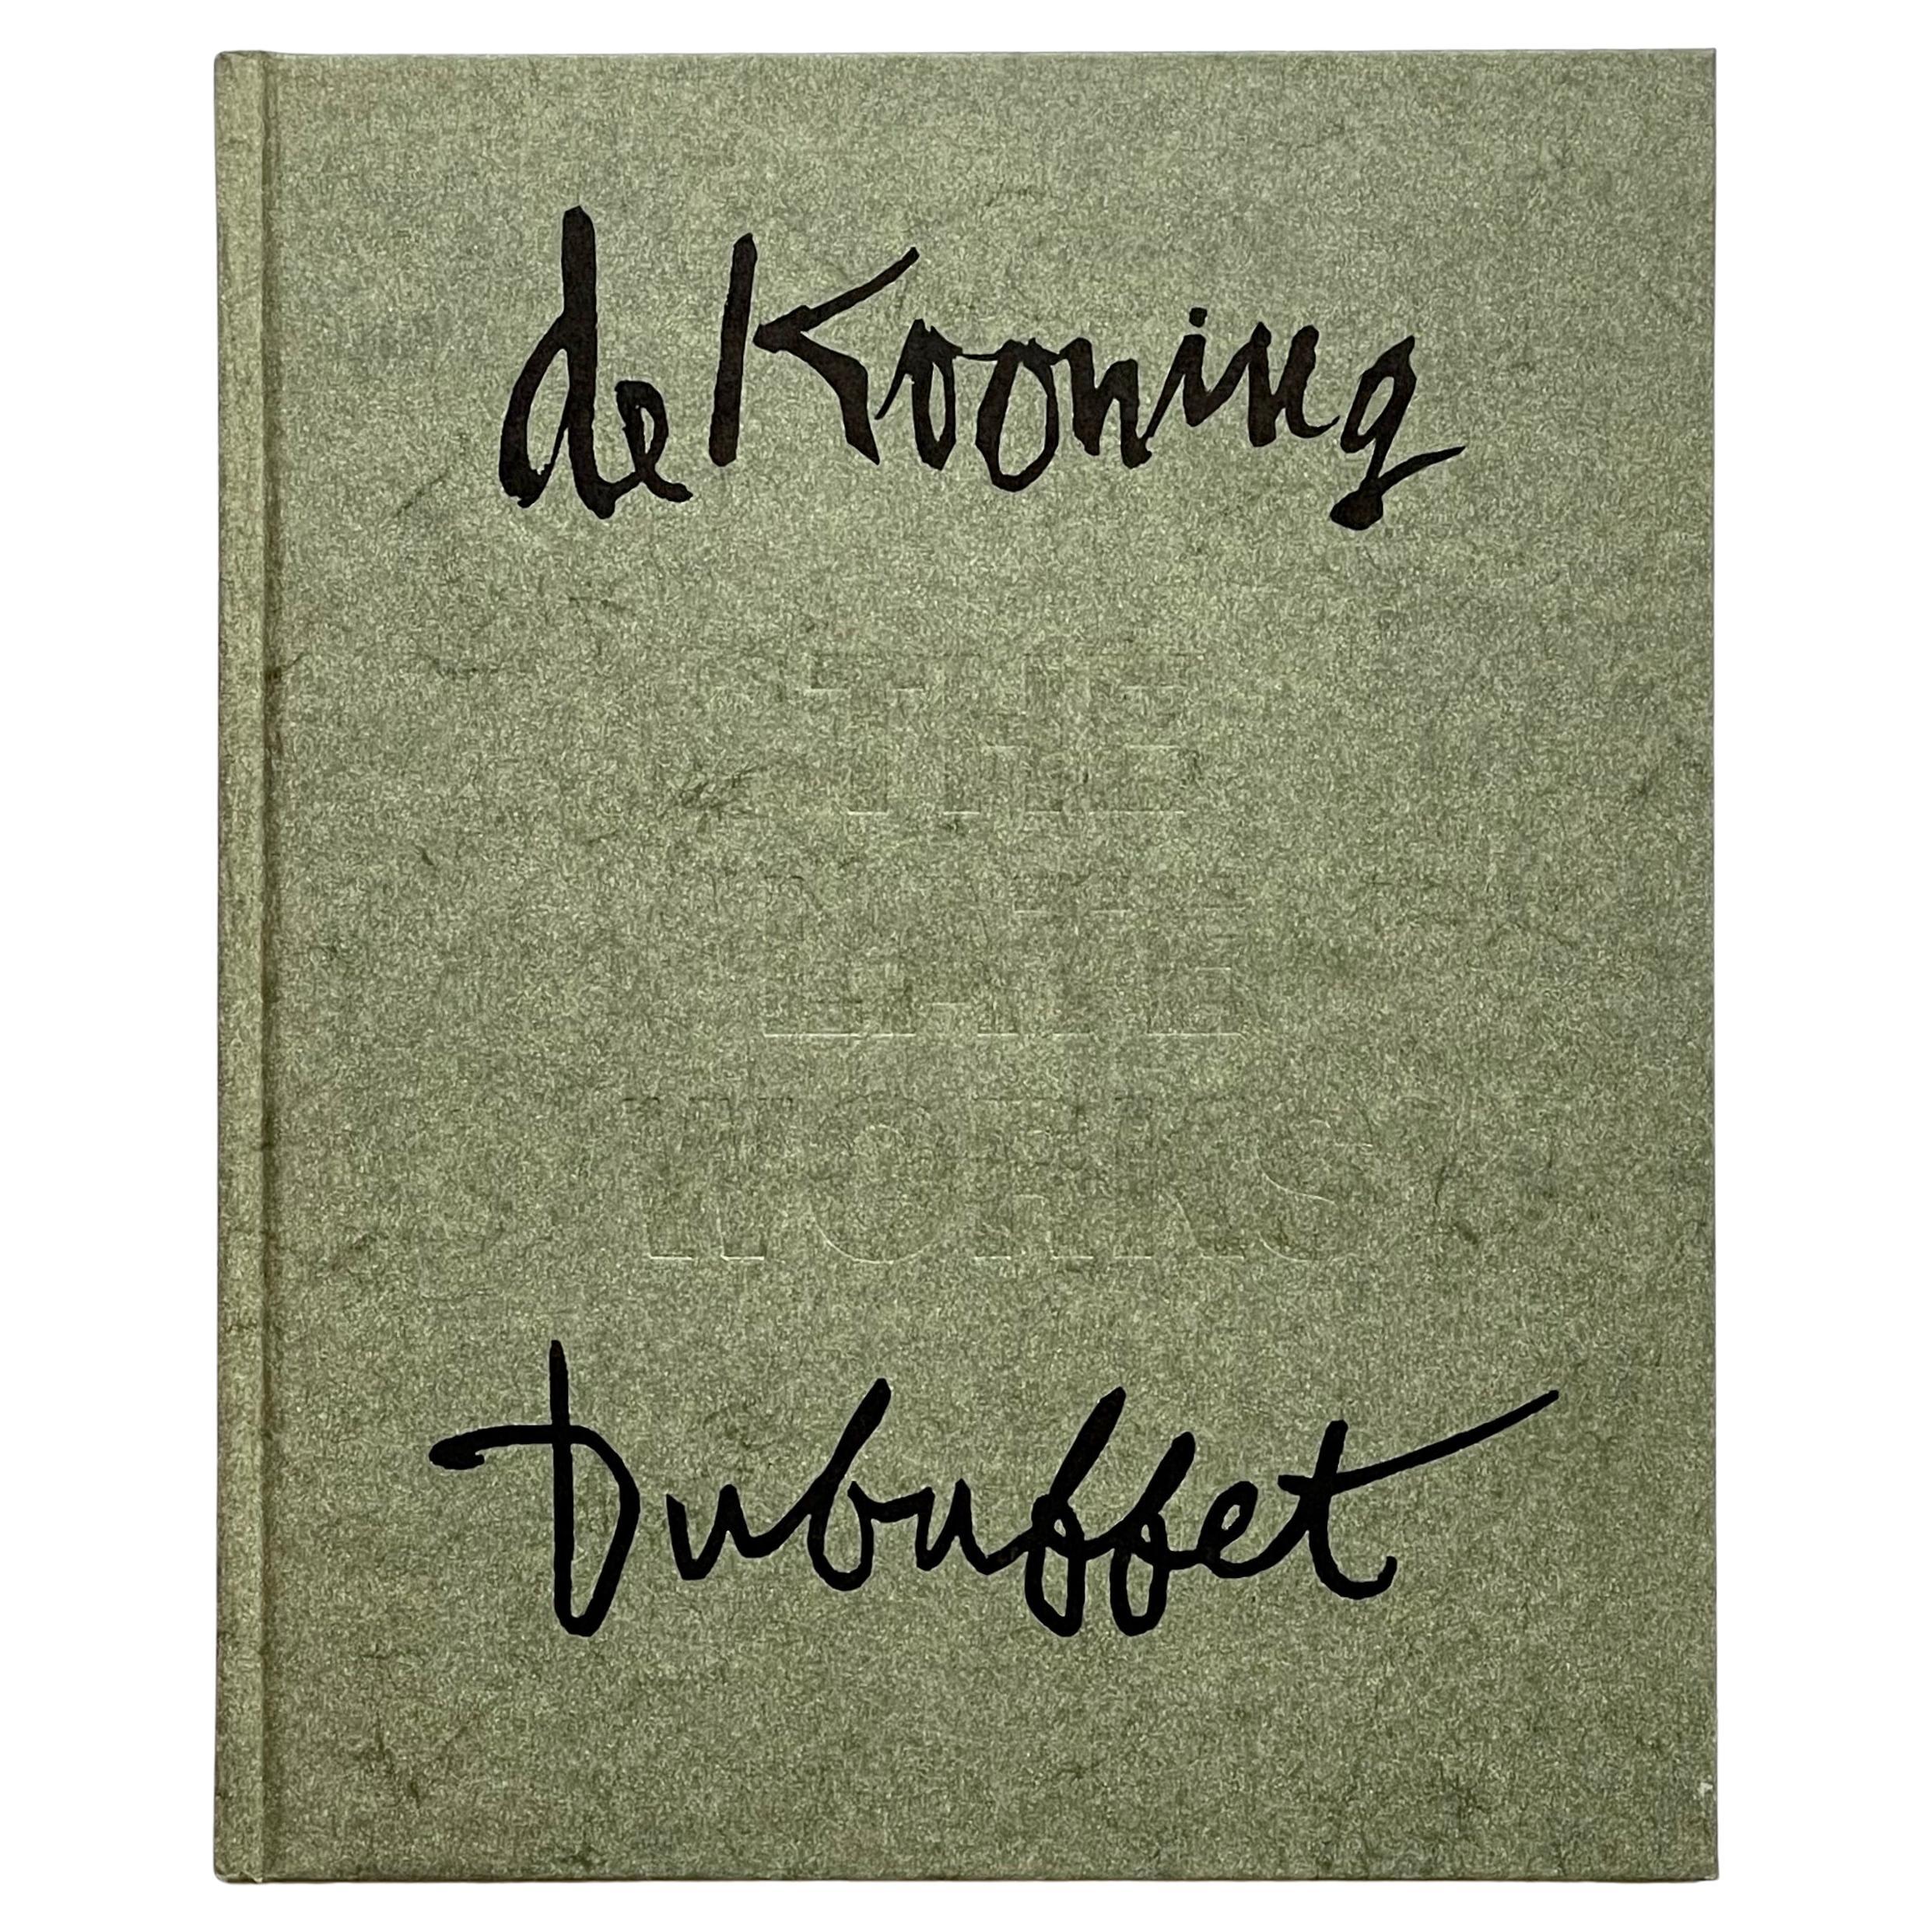 De Kooning / Dubuffet, the Late Works, Peter Schjeldahl, 1st Edition, Pace, 1993